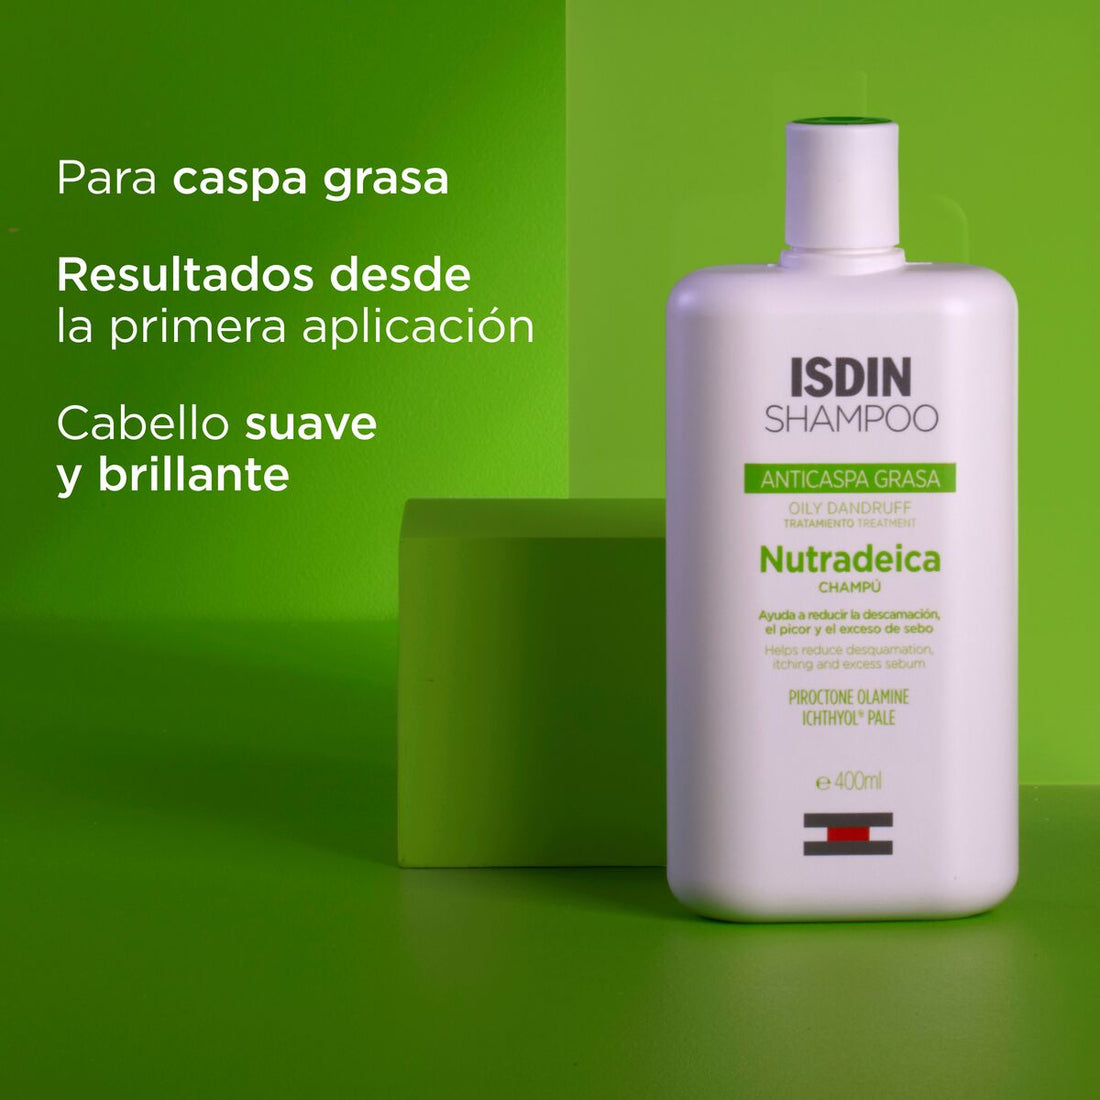 ISDIN Shampoo Anticaspa Grasa Nutradeica Champú (400ml)